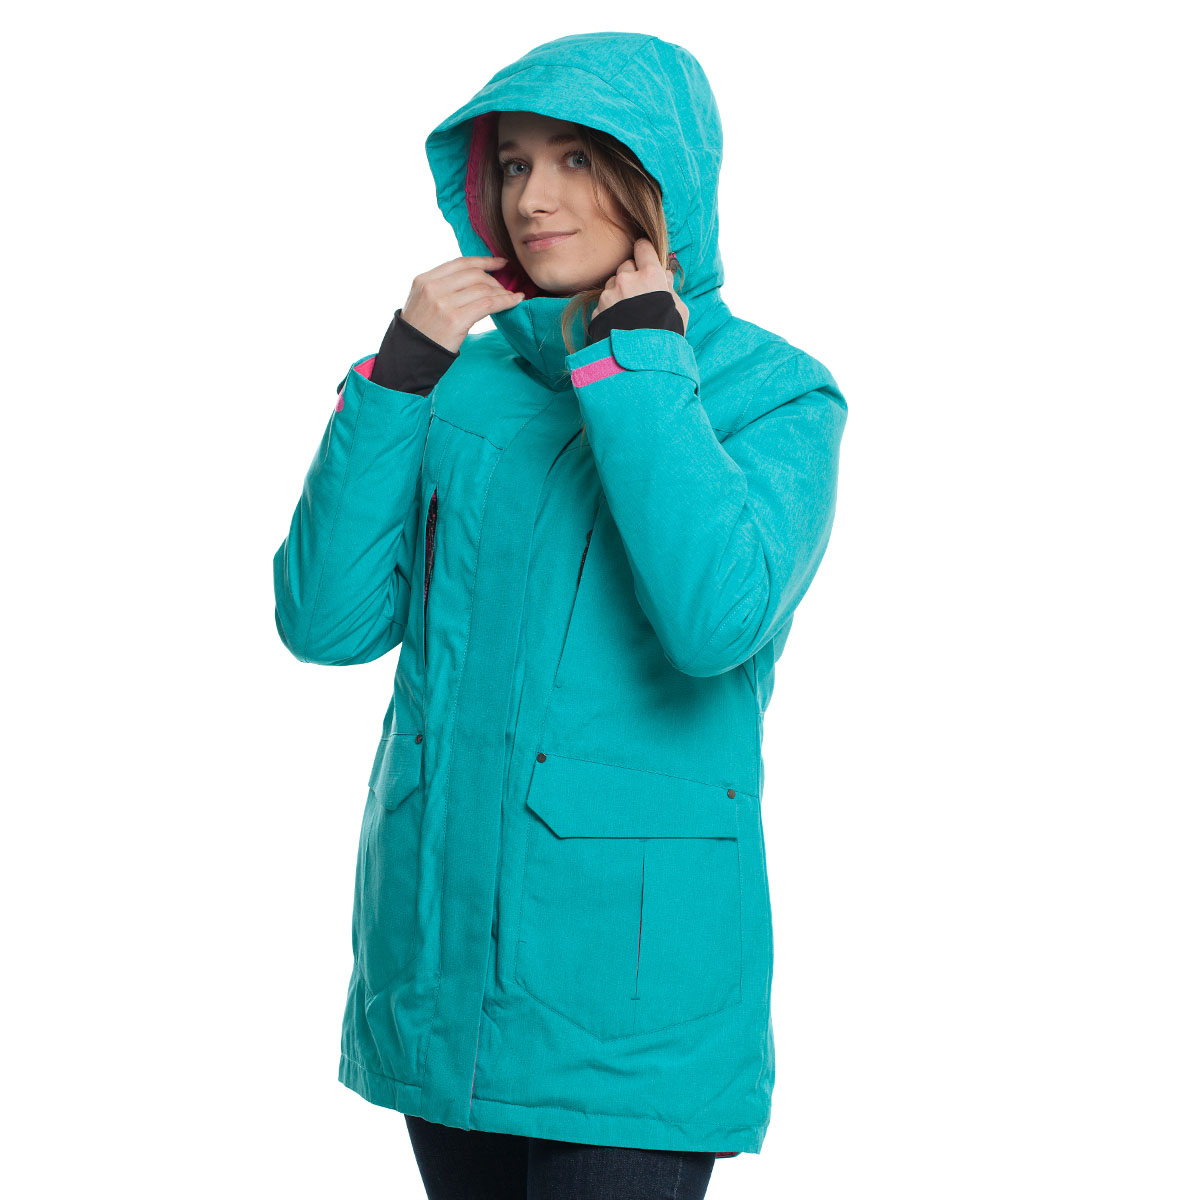 Куртка WHS женская зимняя голубая. WHS куртка женская зимняя утепленная. WHS куртка зеленая. WHS куртка женская пестрая.